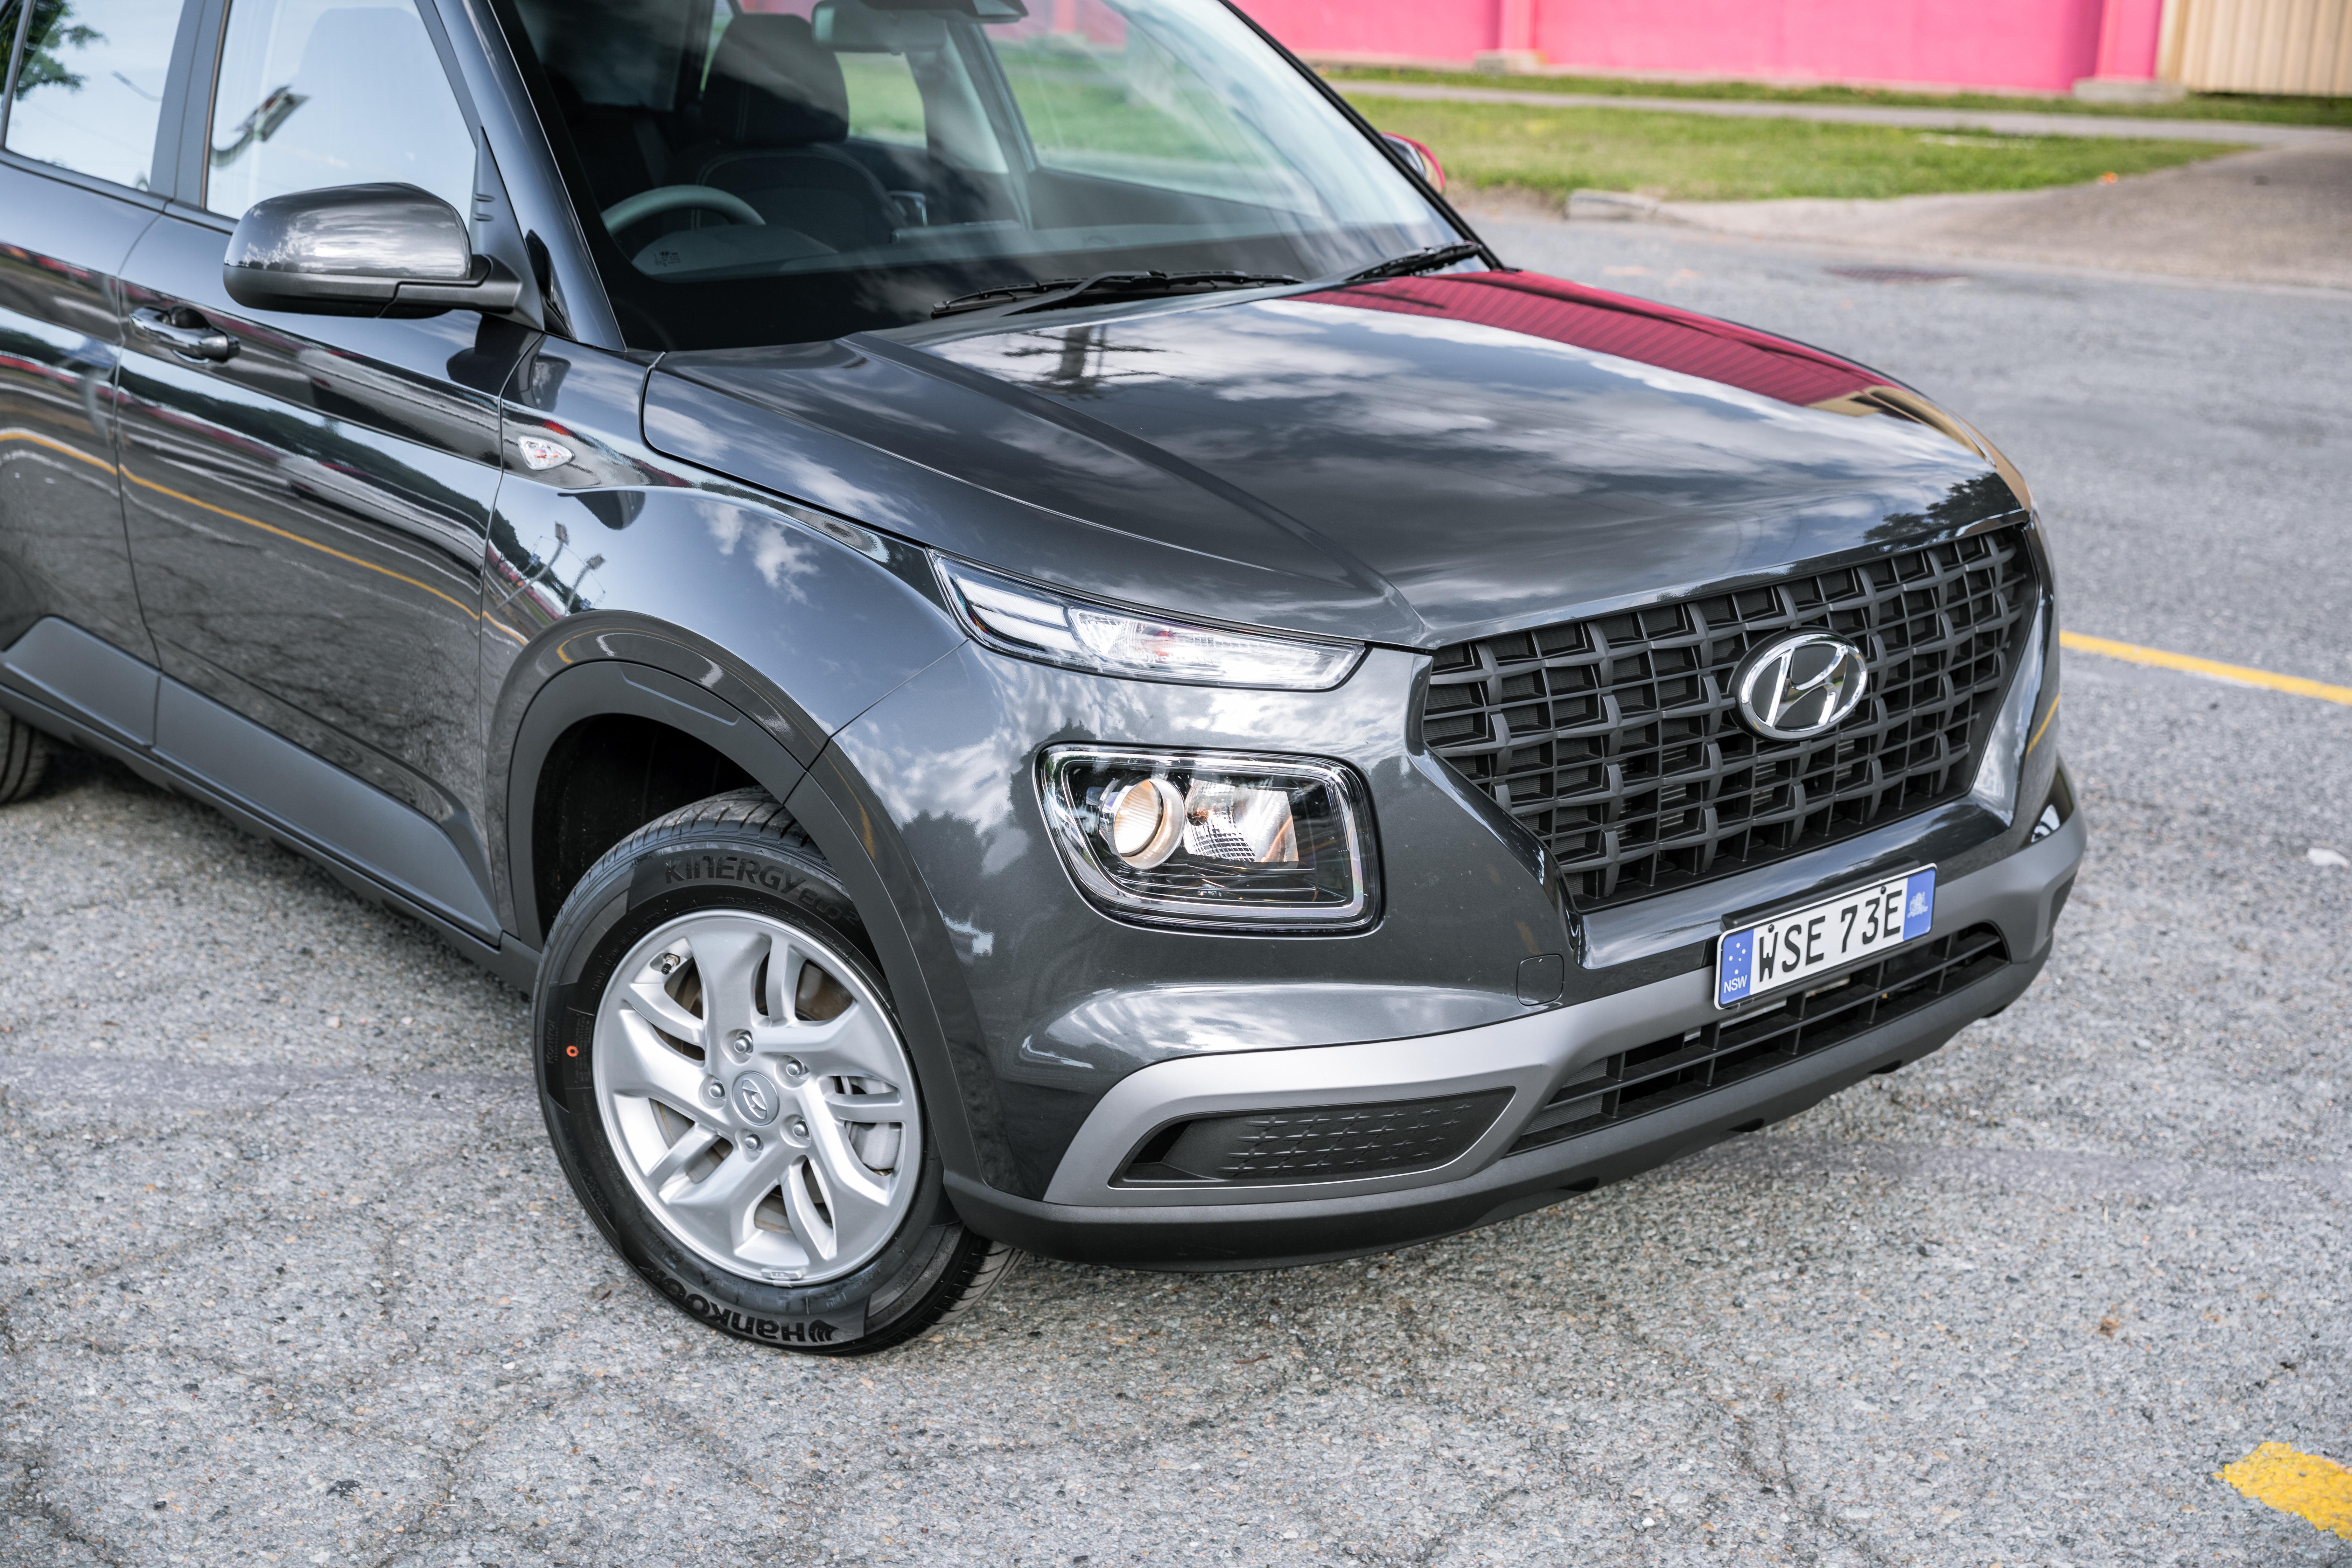 2021 Hyundai Venue Elite review - Drive